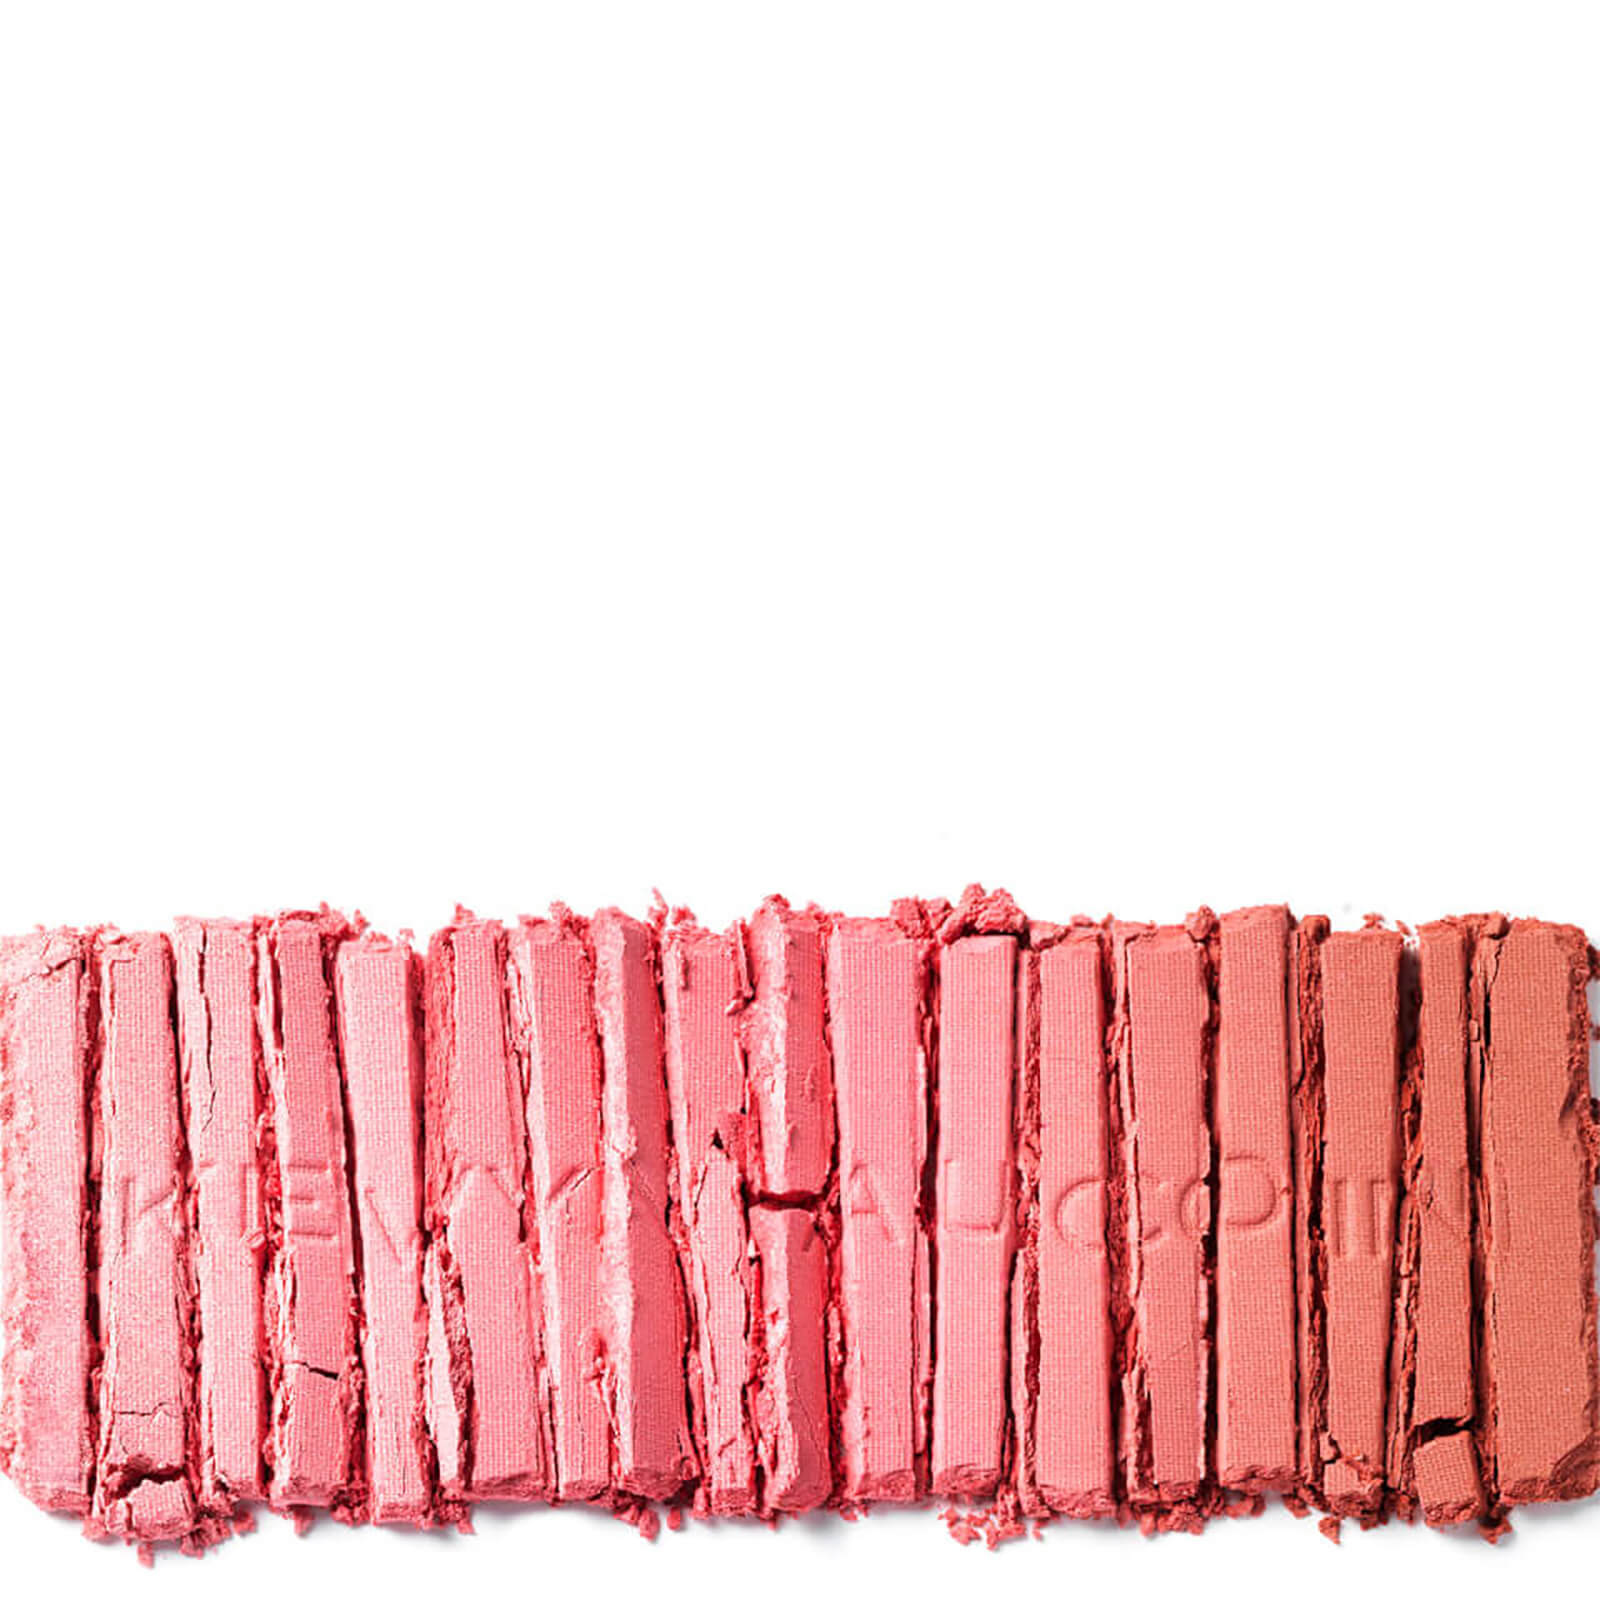 Kevyn Aucoin The Neo-Blush 0.2 oz (Various Shades) – Pink Sand lookfantastic.com imagine